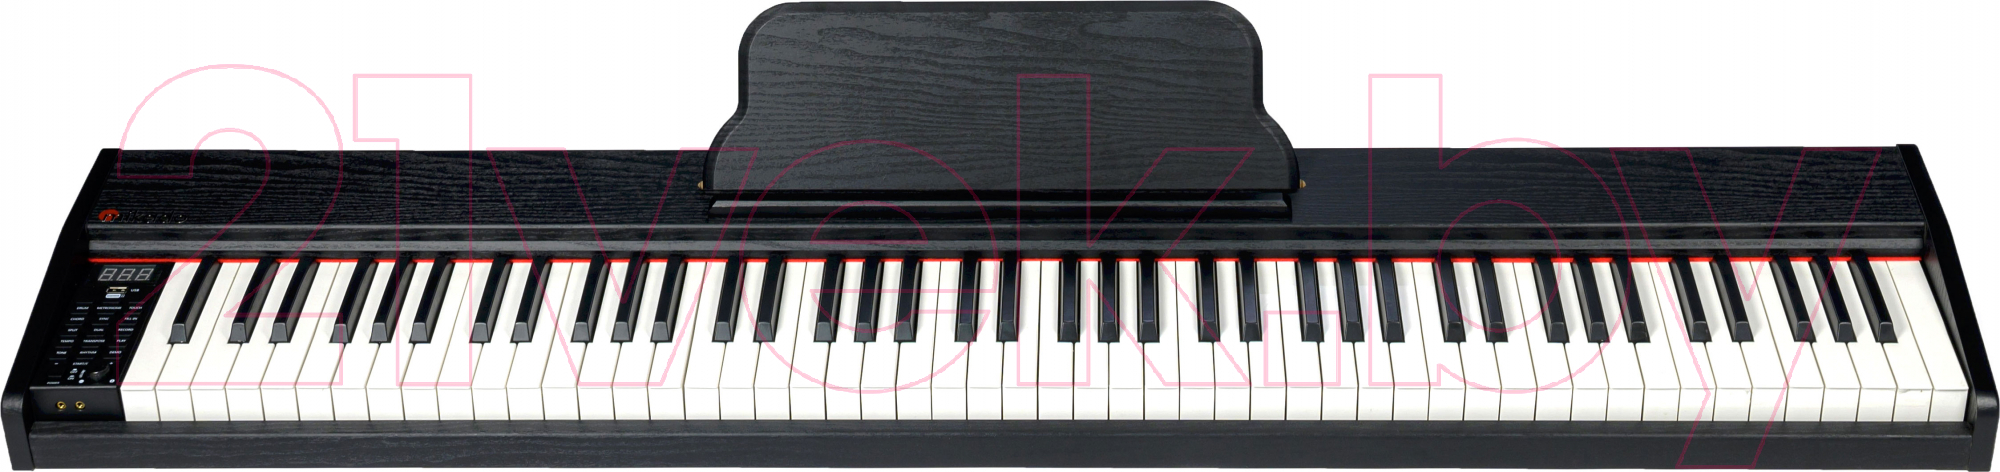 Цифровое фортепиано MikadO MK-1000B